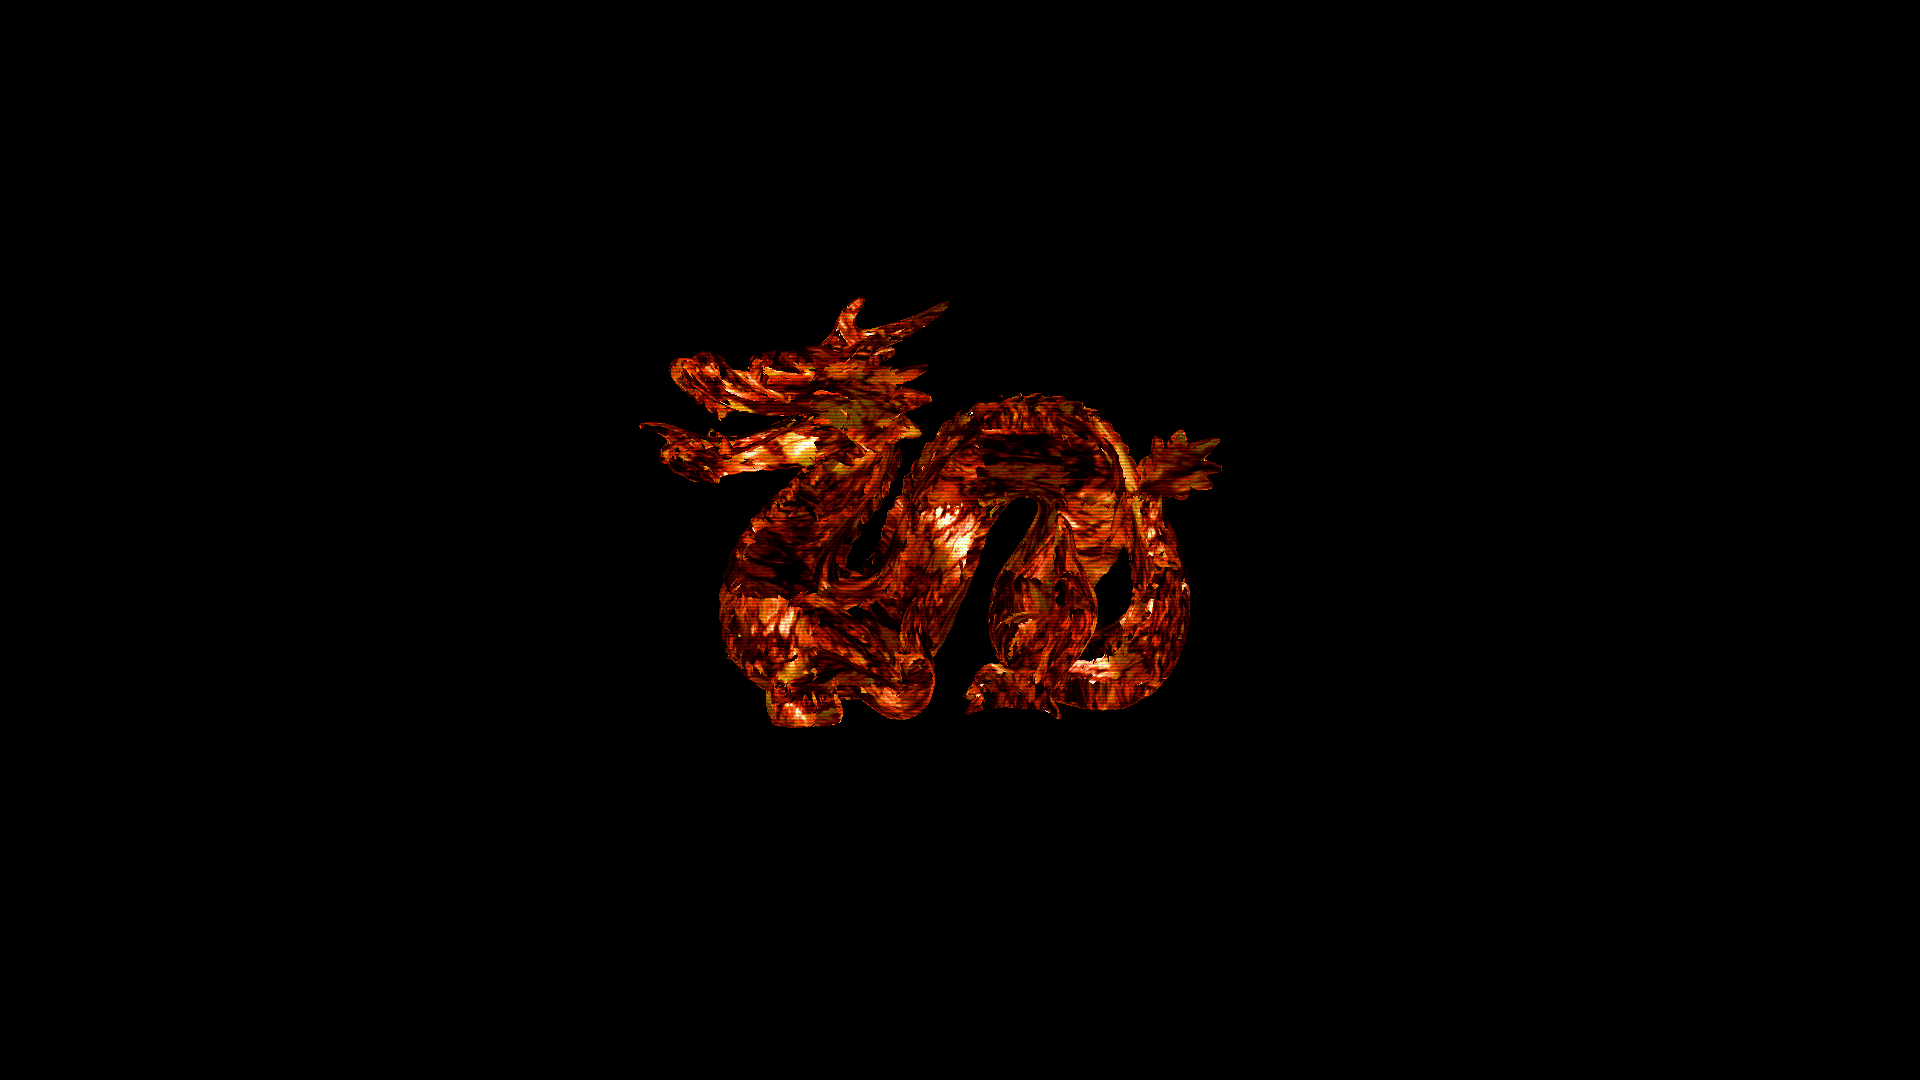 General 1920x1080 dragon CGI lava fantasy art minimalism digital art creature simple background black background Chinese dragon